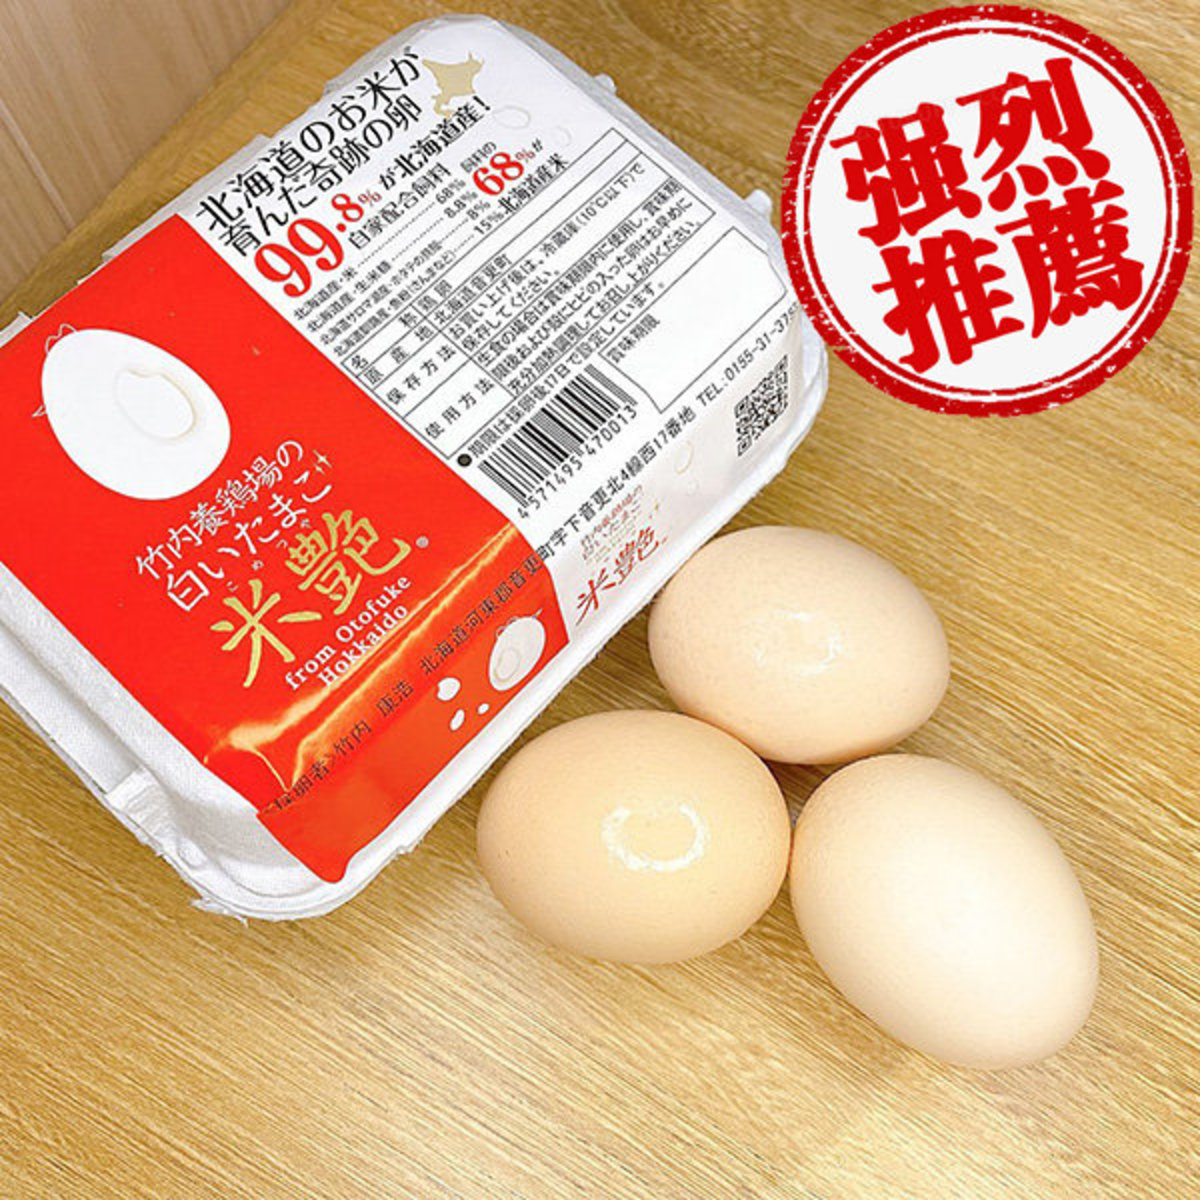 What Food Shop Hokkaido Fragrant Rice Eggs 1 Box 6 Pcs Hktvmall The Largest Hk Shopping Platform